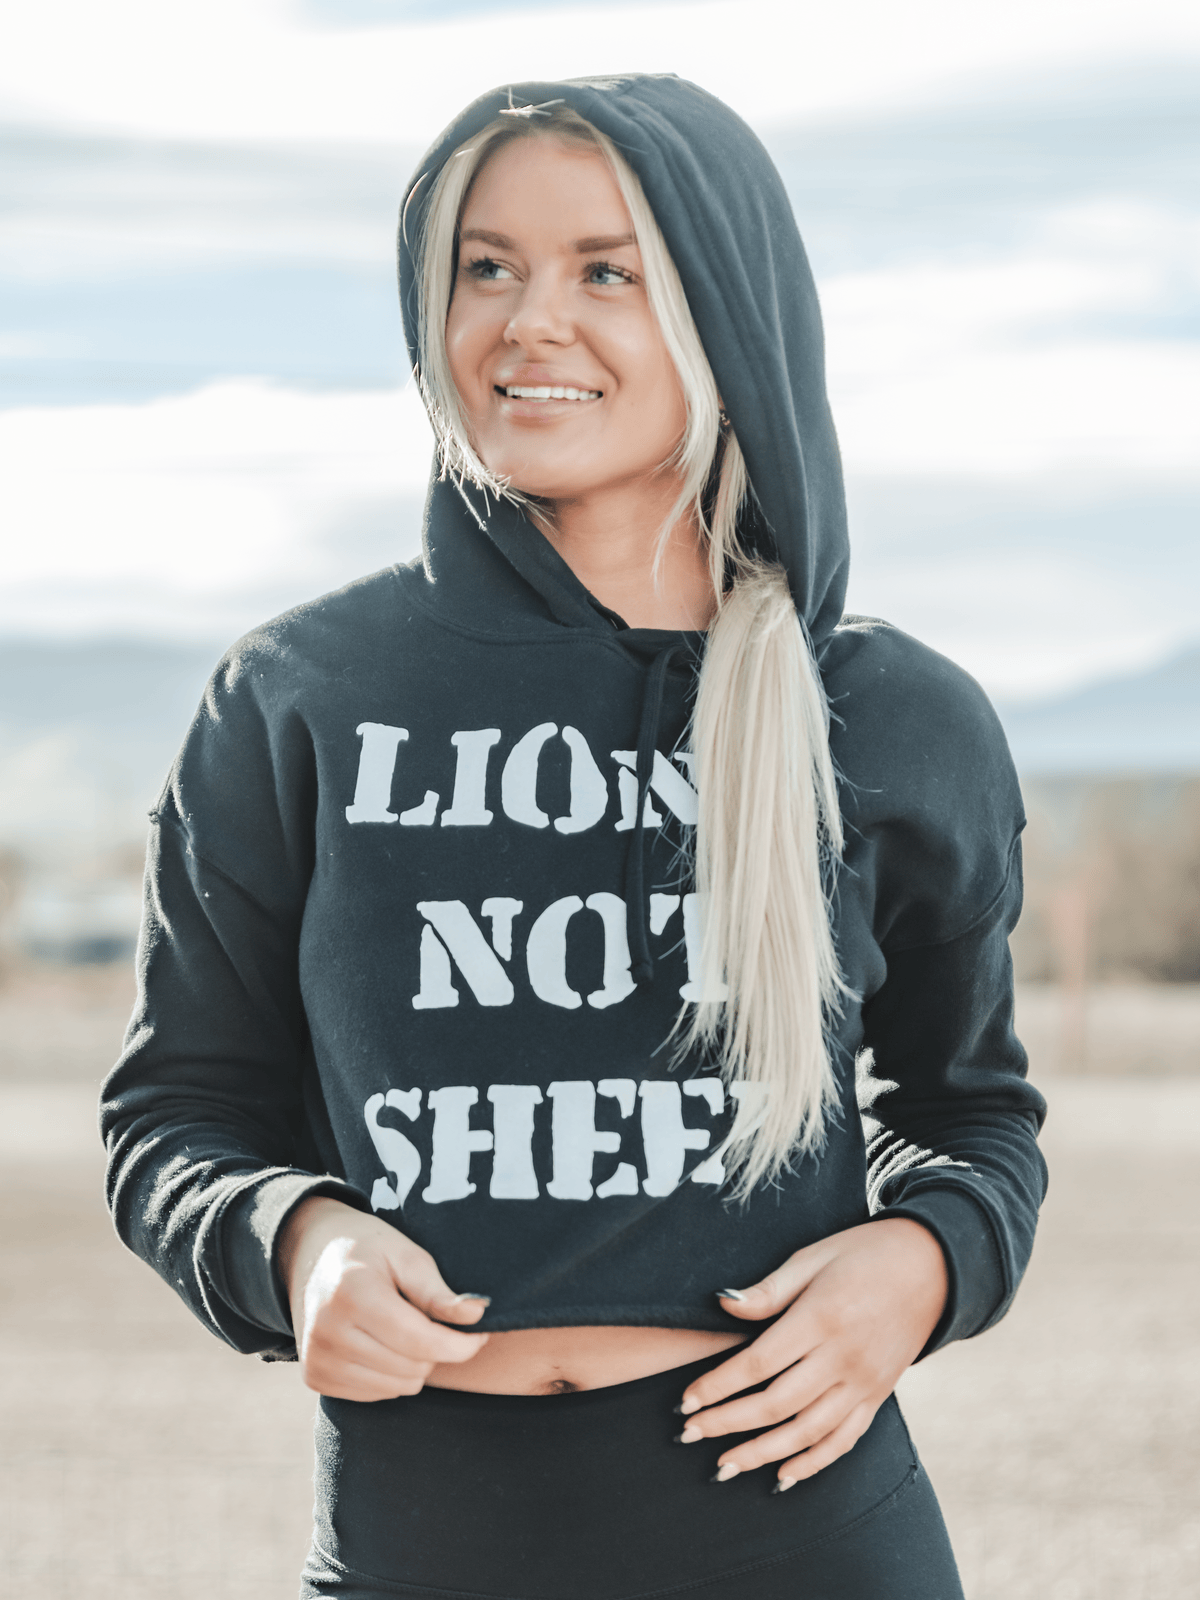 LIONS NOT SHEEP OG Womens Crop Top Hoodie - Lions Not Sheep ®